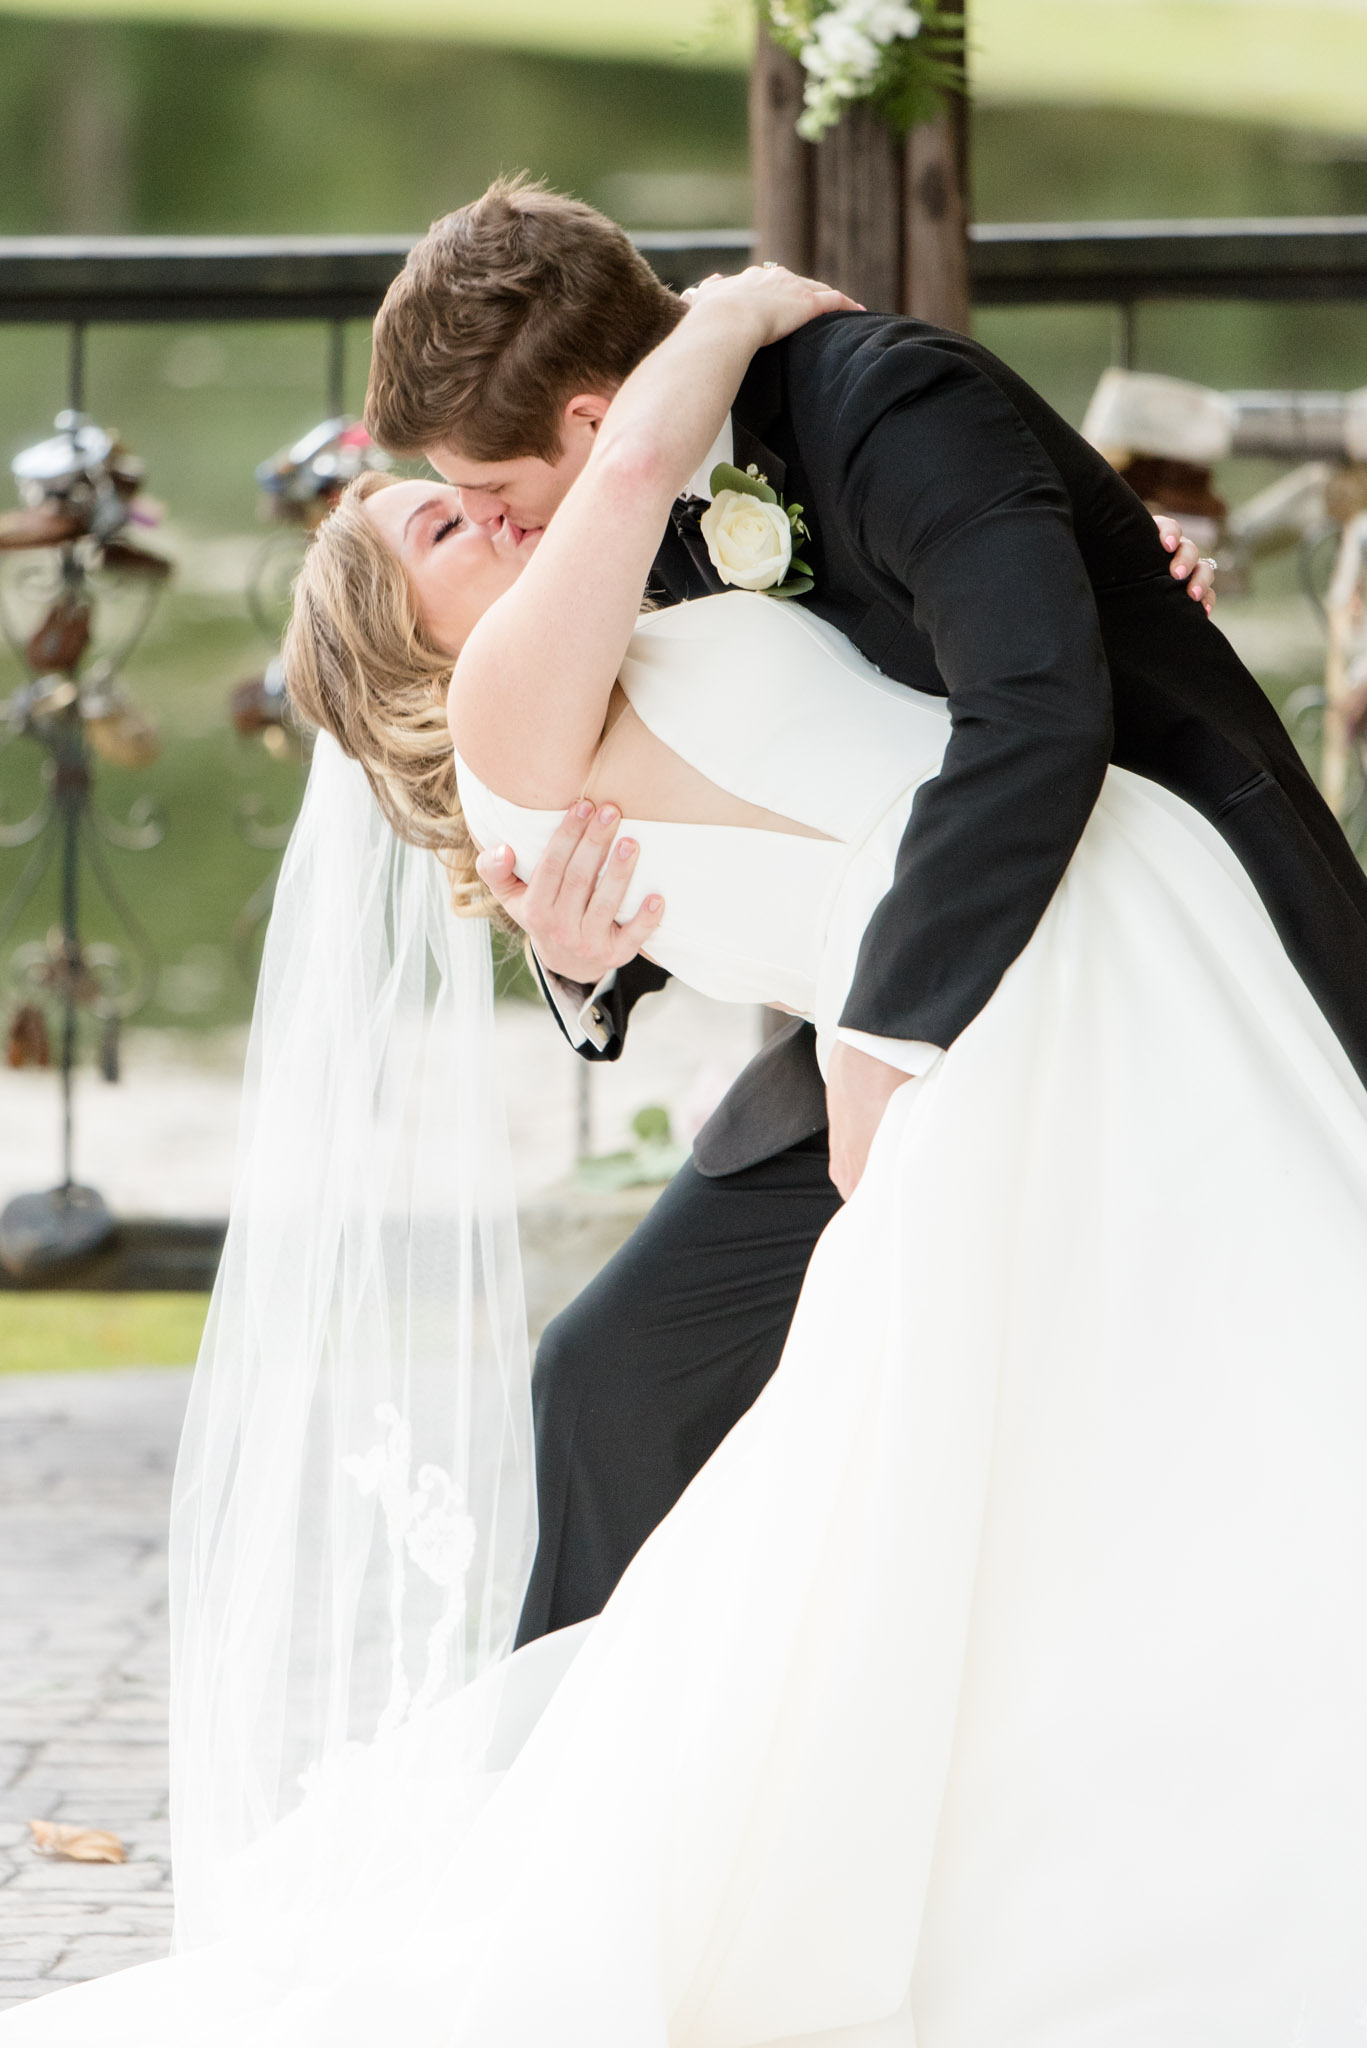 couple kisses at wedding ceremony.